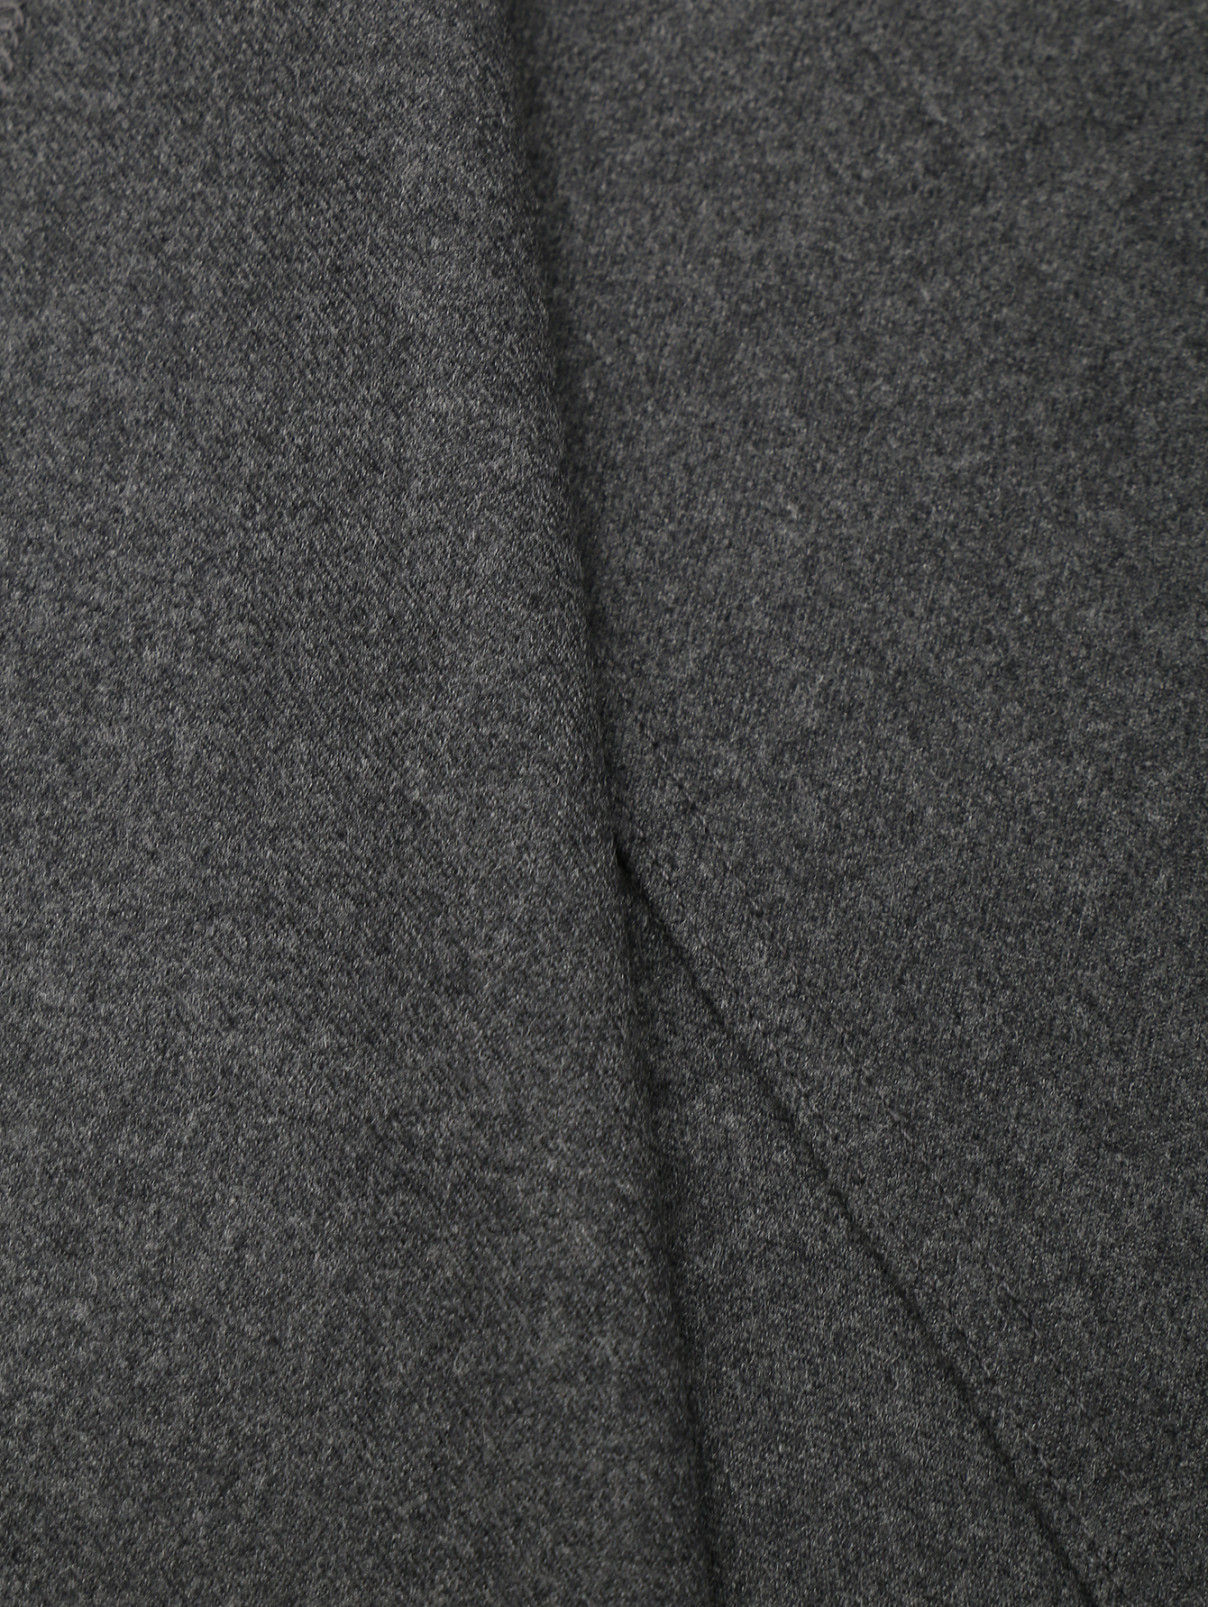 Юбка-годе из шерсти Alberta Ferretti  –  Деталь1  – Цвет:  Серый